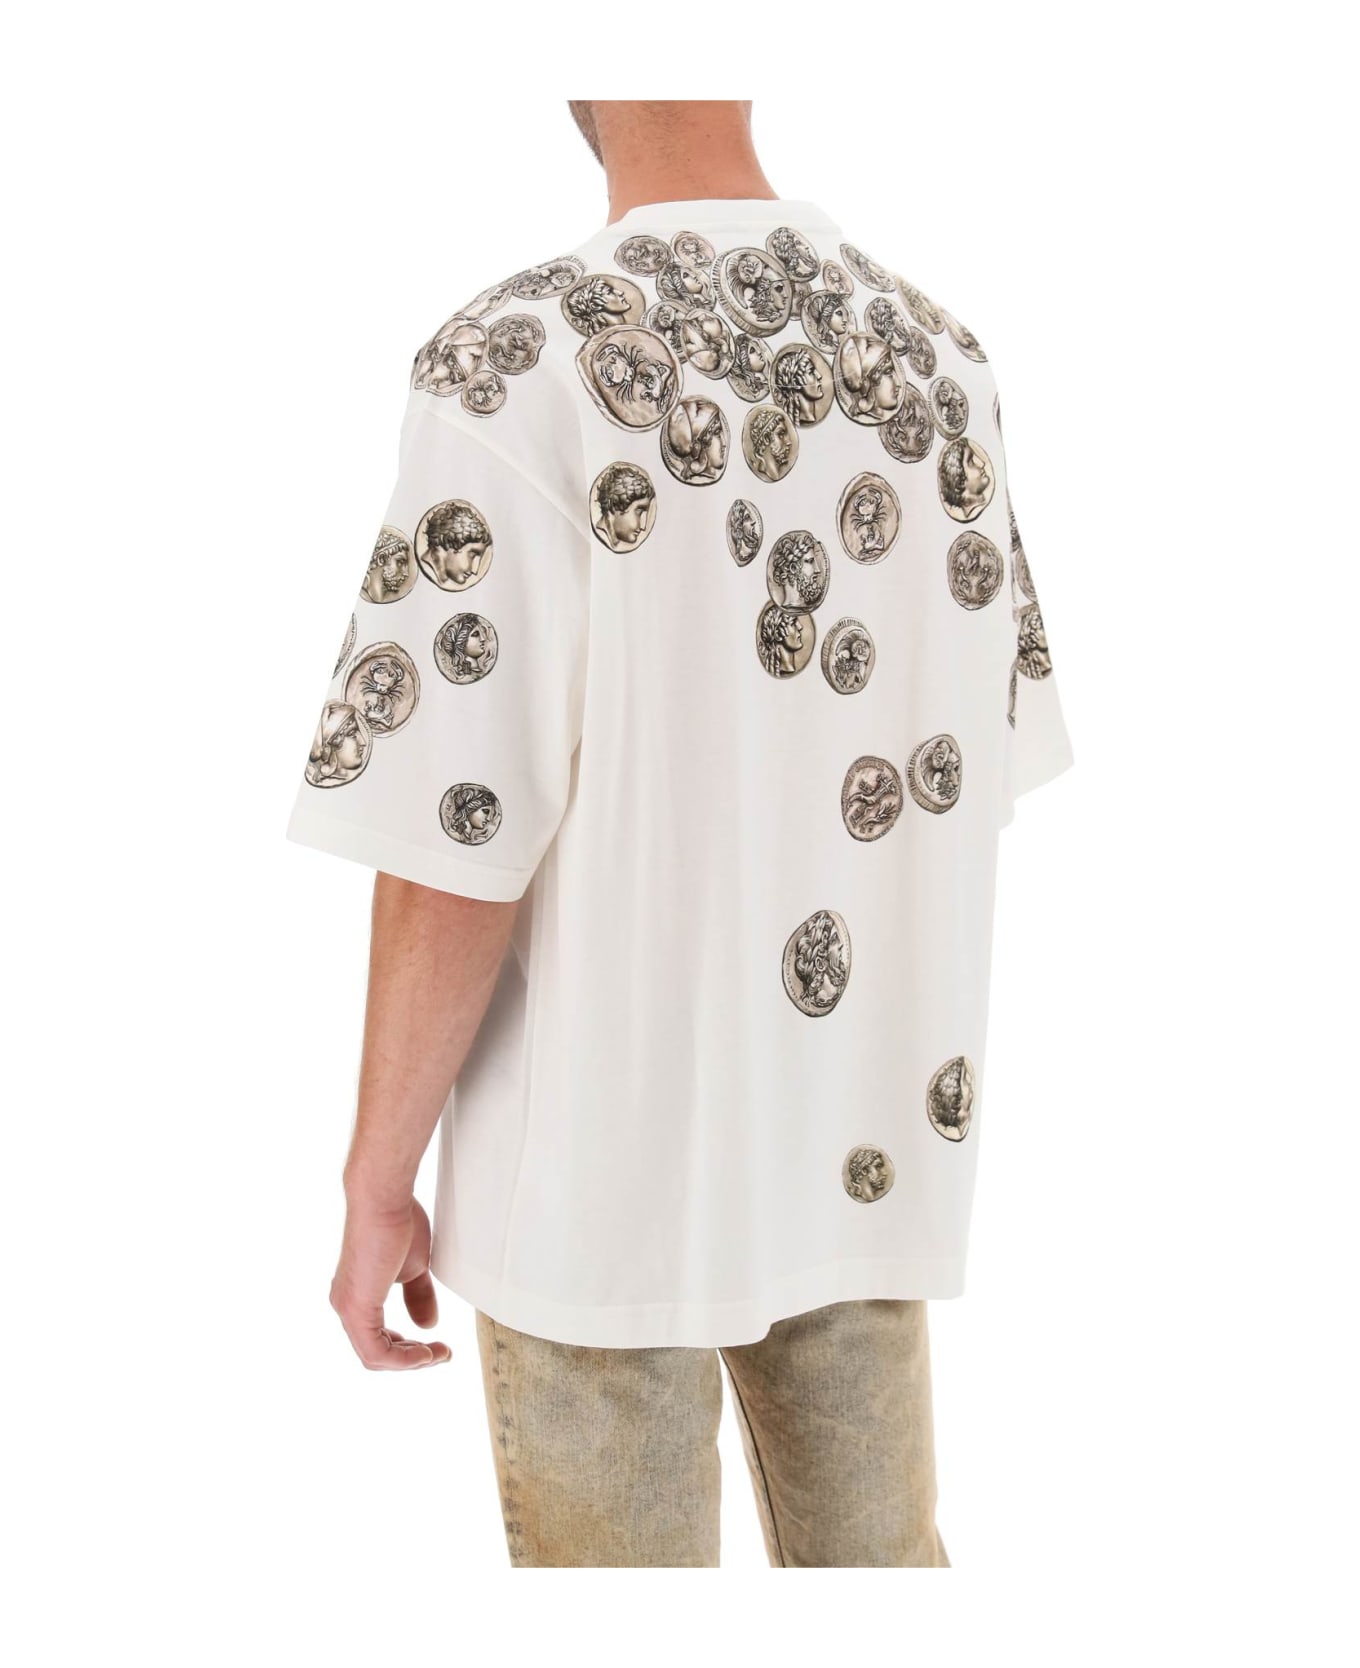 Dolce & Gabbana Coins Print T-shirt - White シャツ